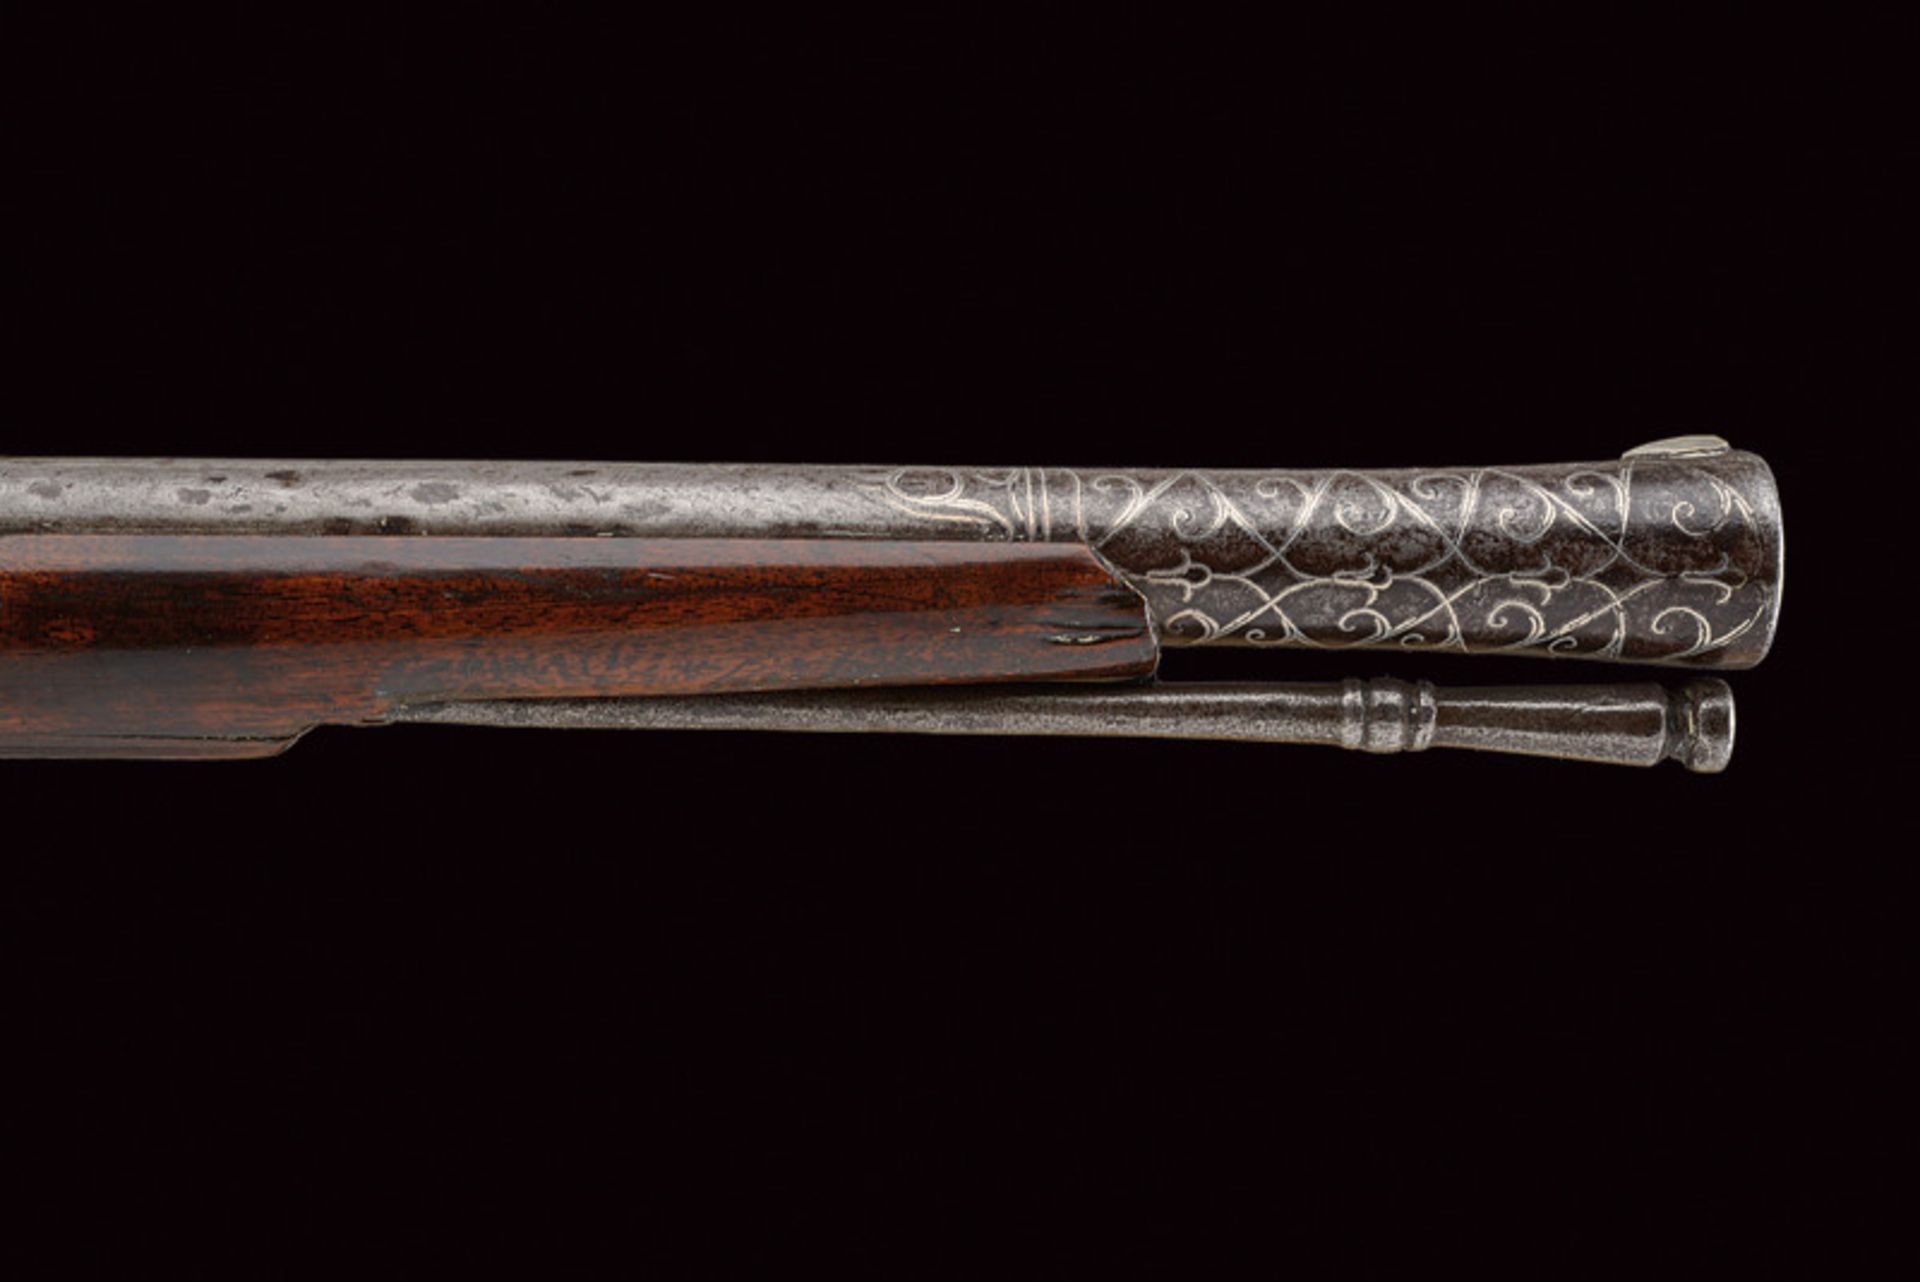 A Jezail flintlock gun with decorated barrel - Image 7 of 8